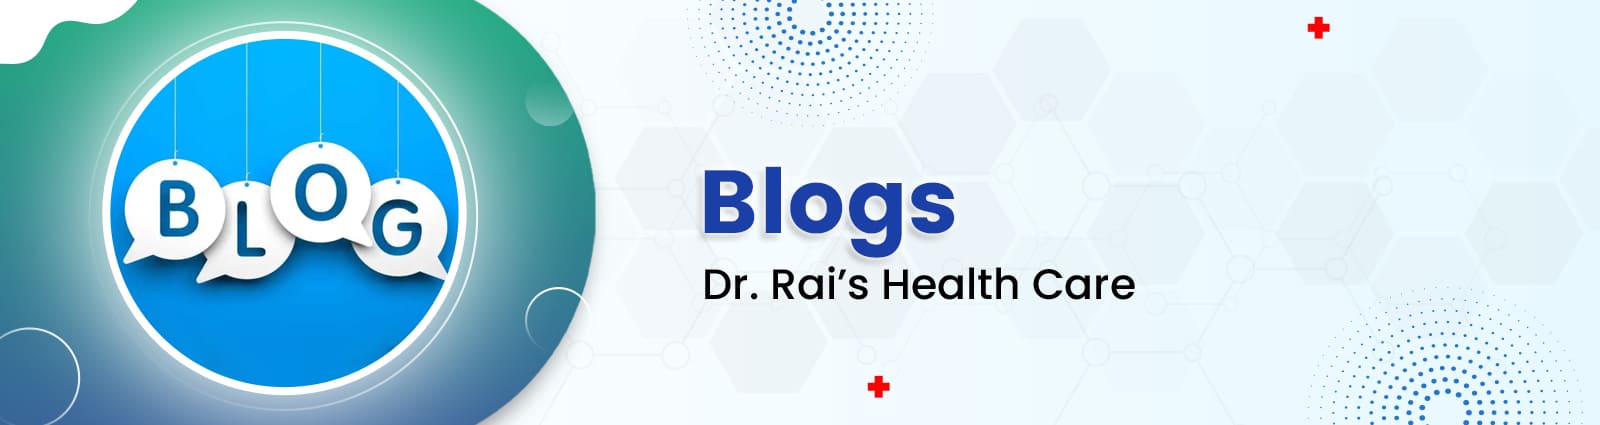 Dr. Rai’s blogs on homopathy